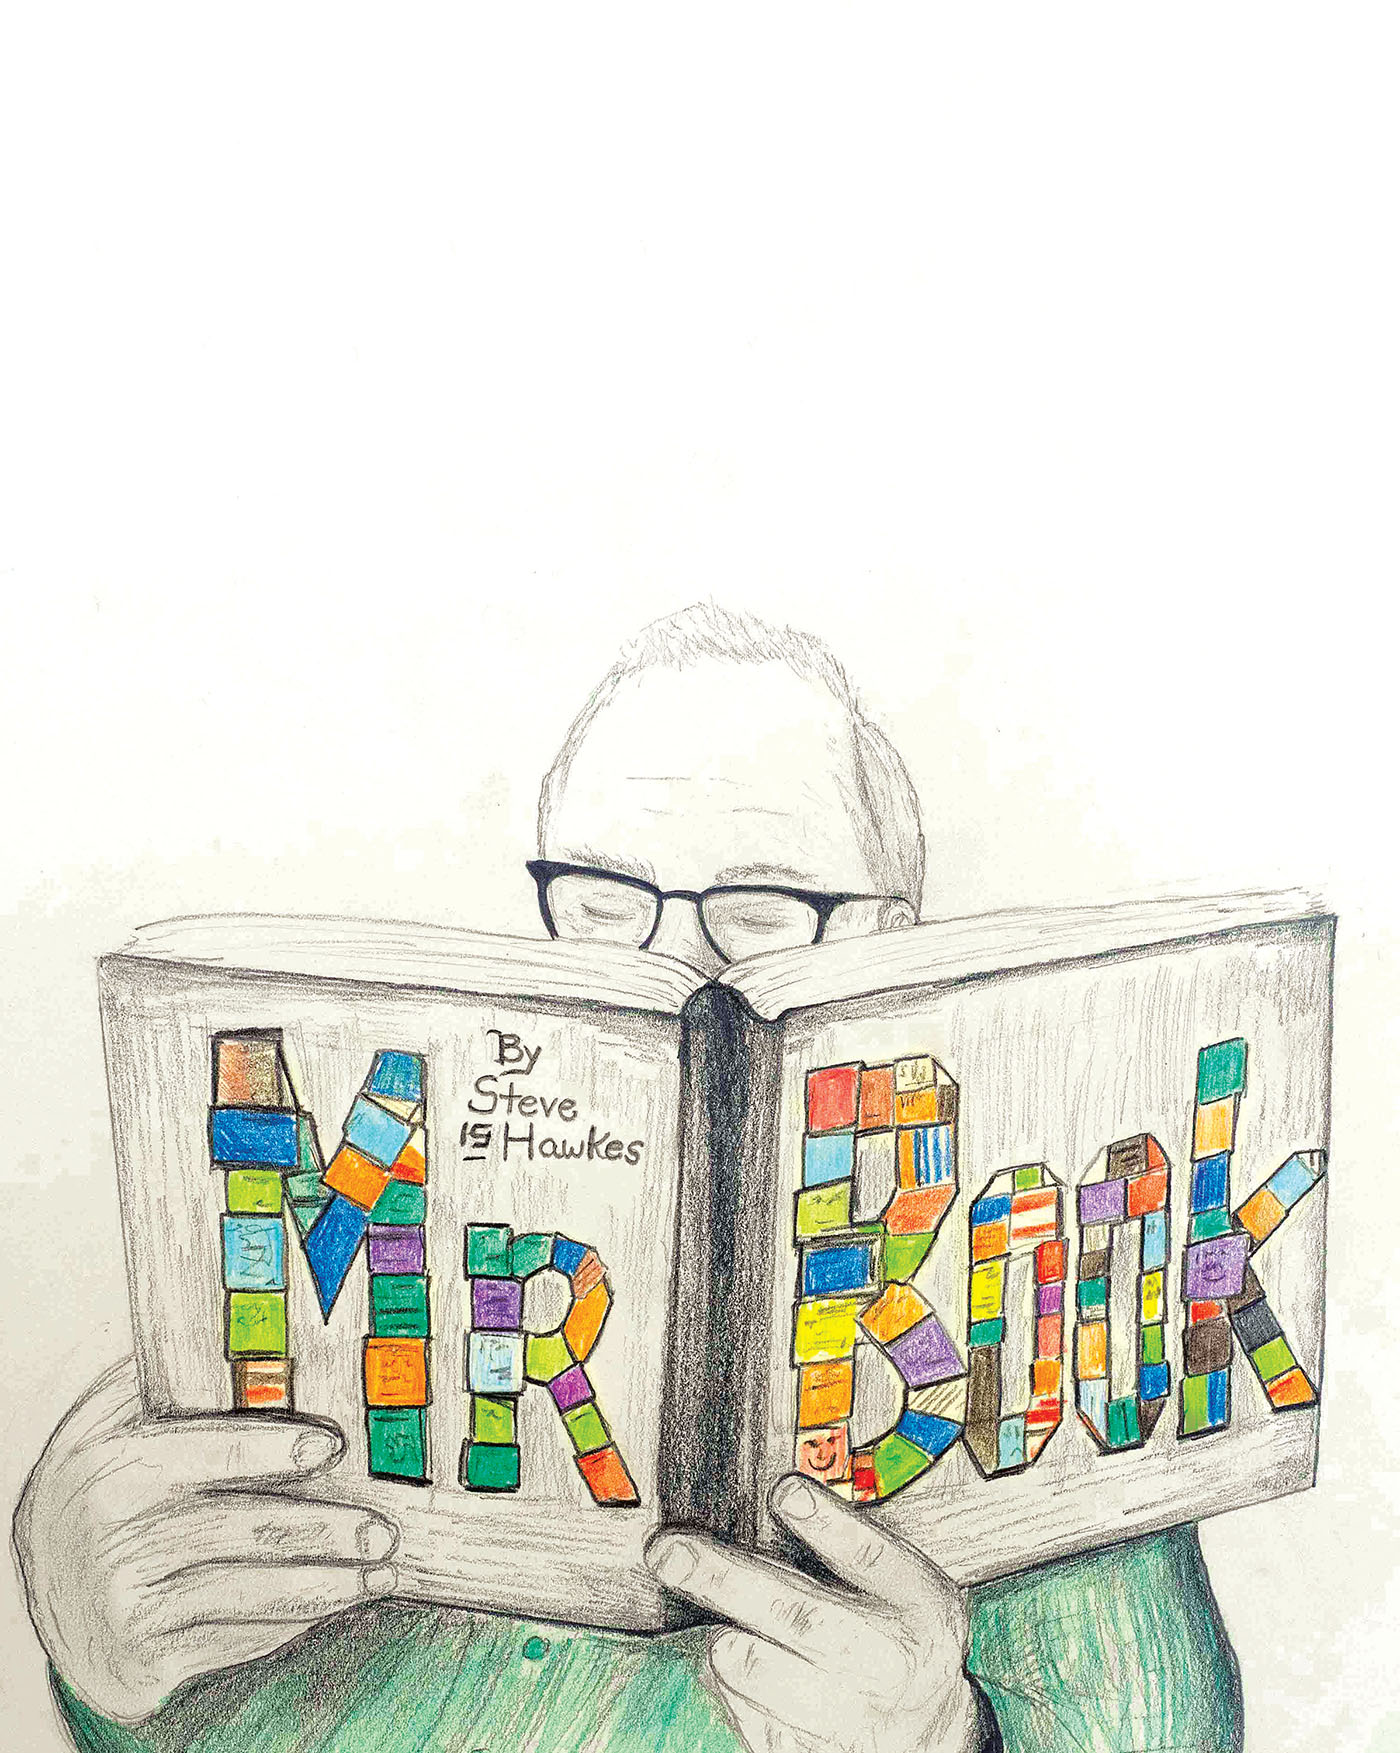 Mr. Book Cover Image